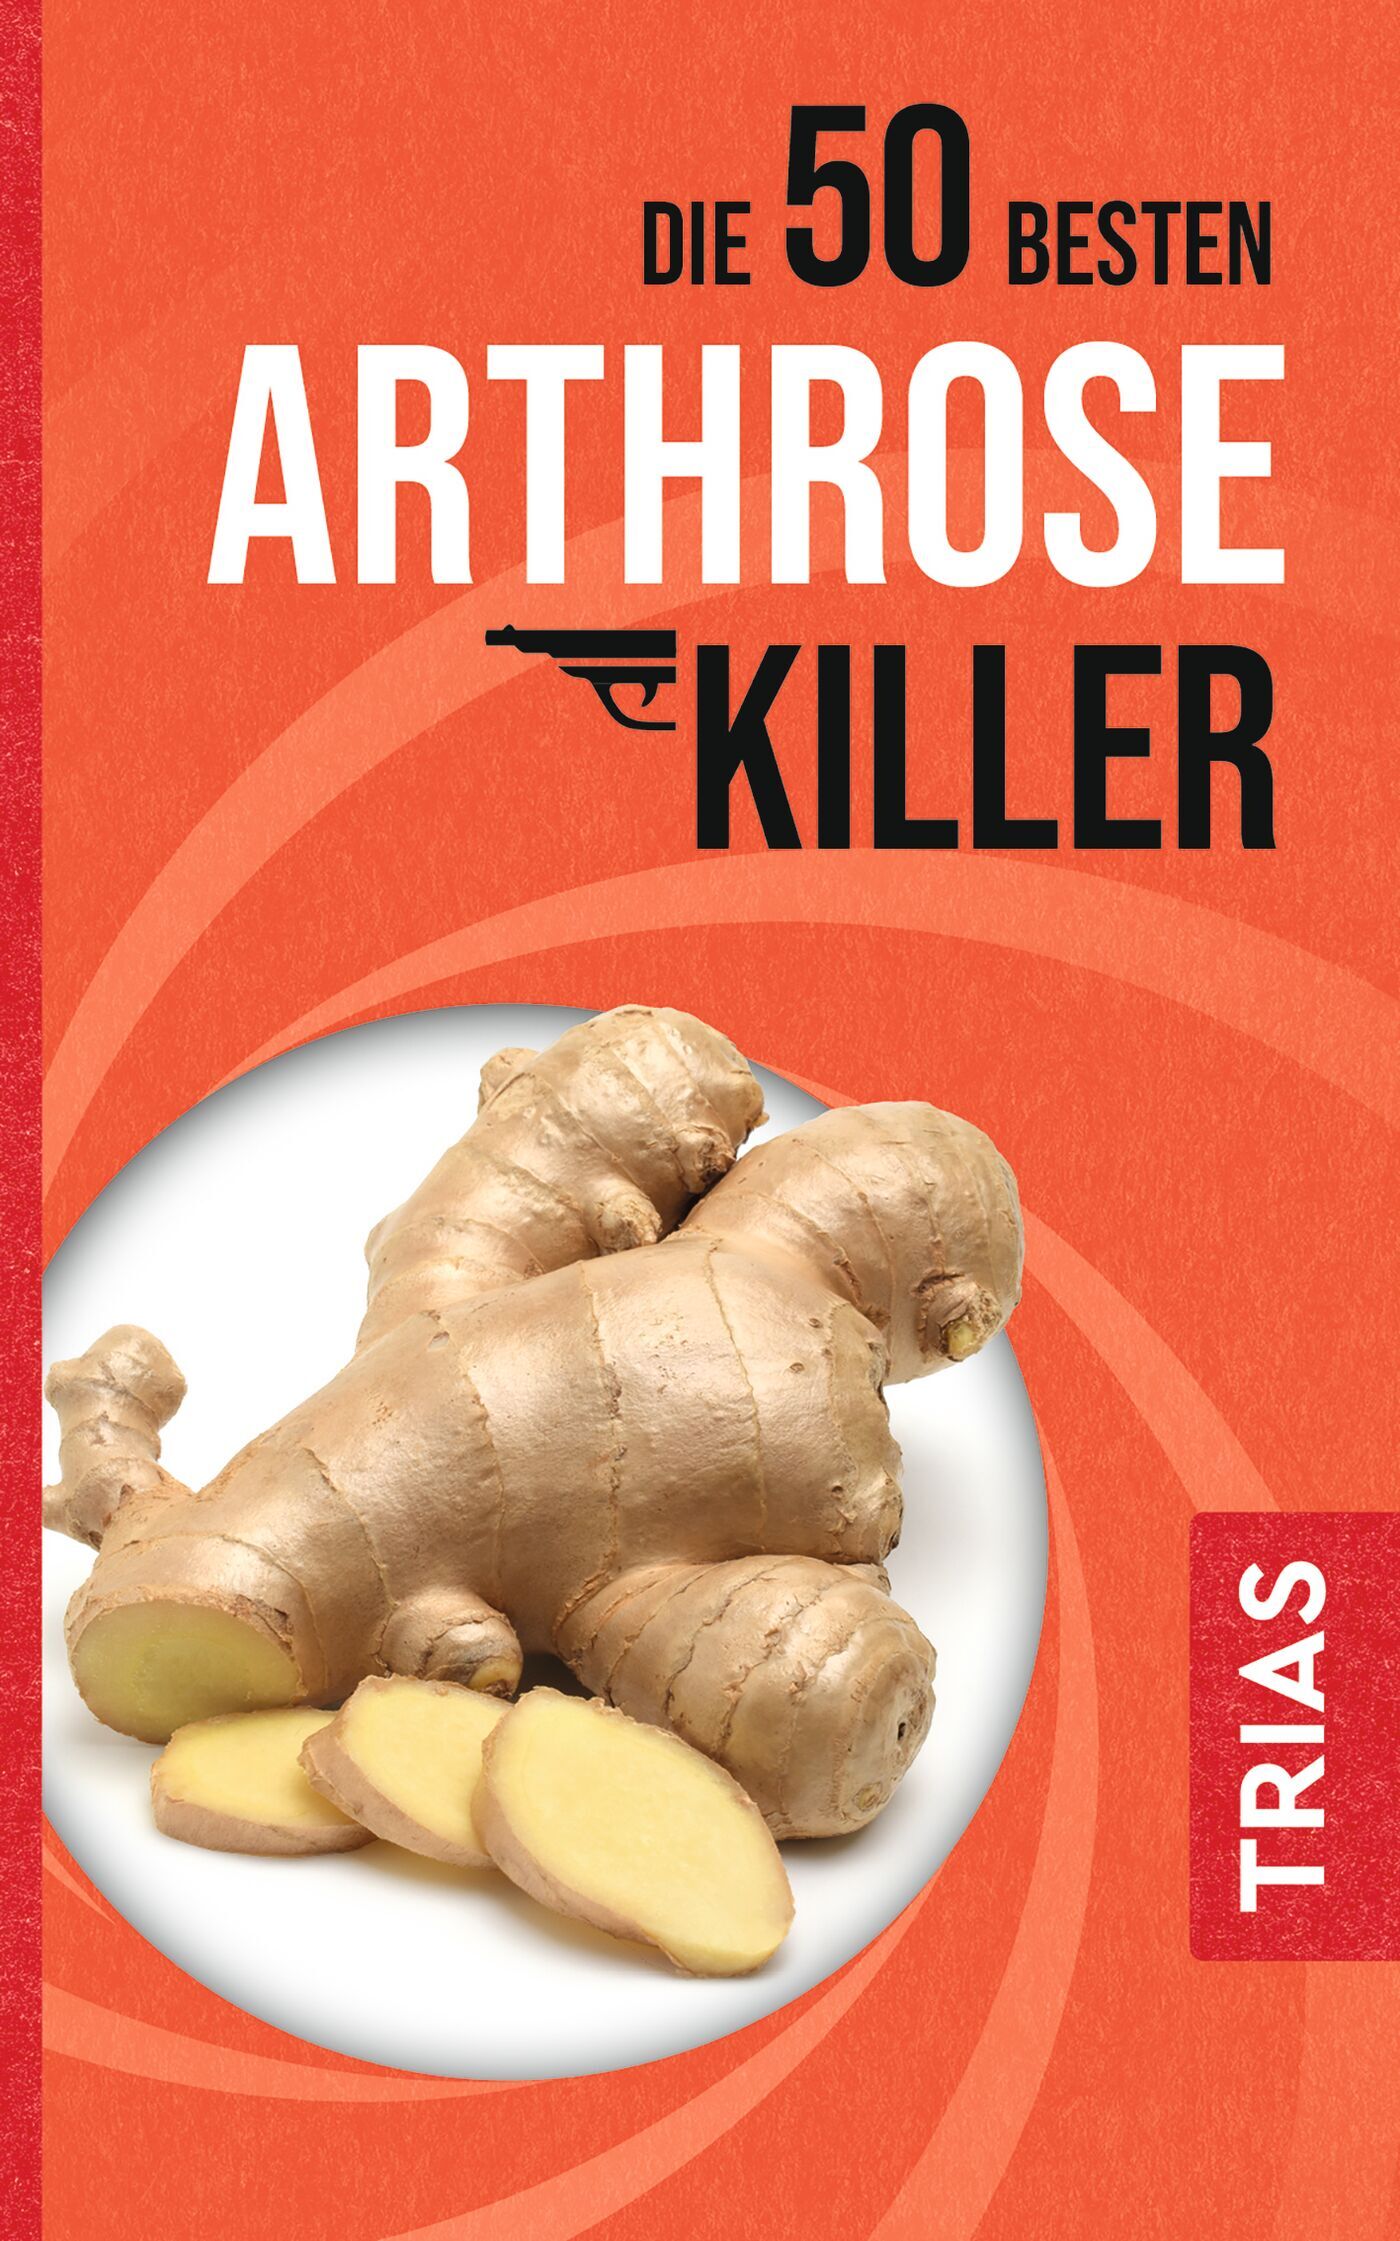 Die 50 besten Arthrose-Killer, 9783432118833